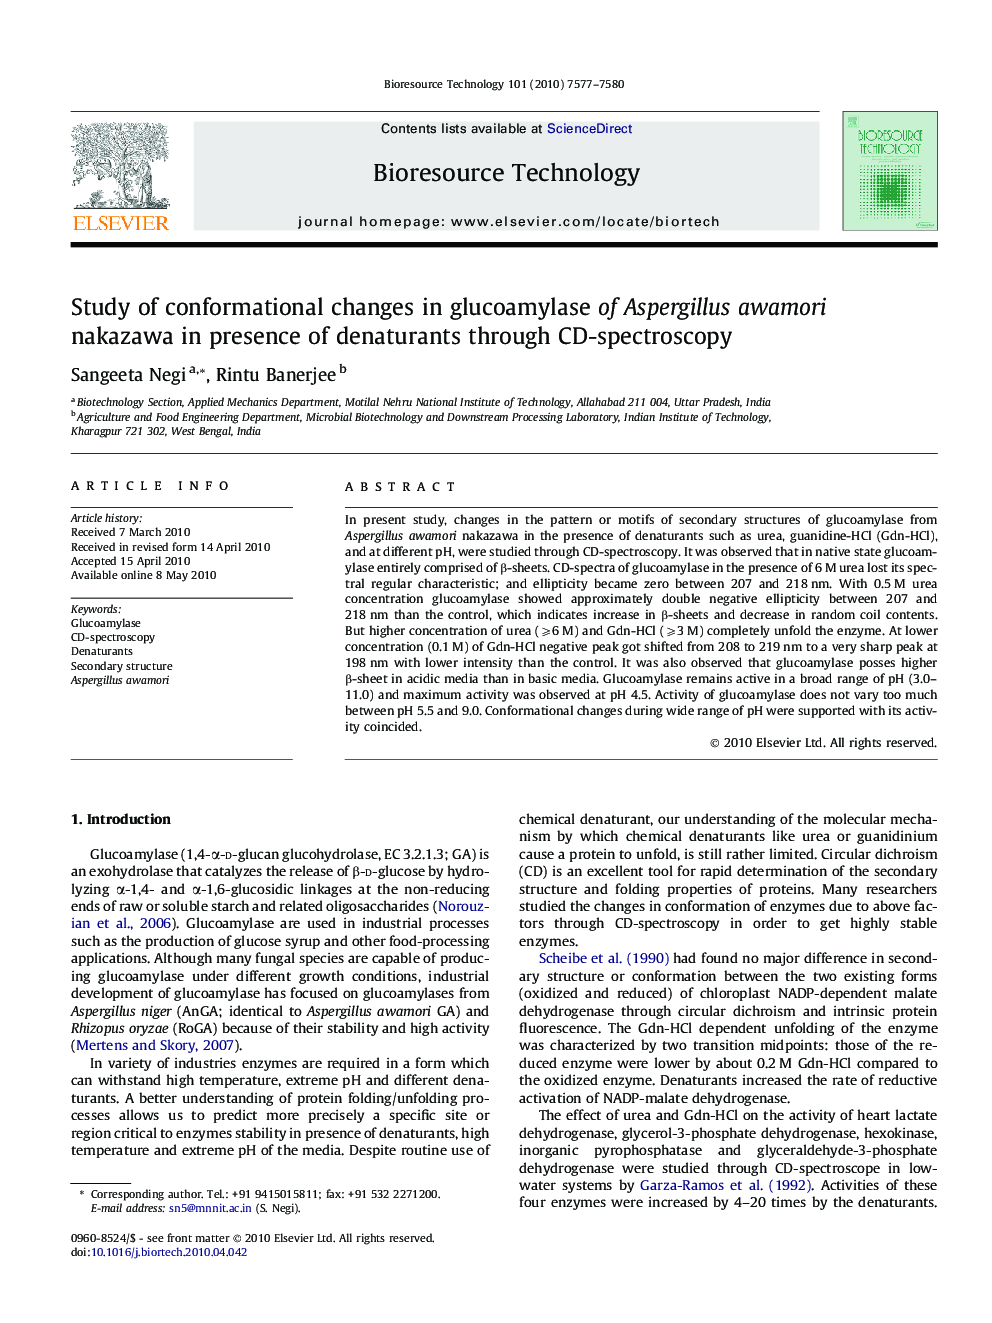 Study of conformational changes in glucoamylase ofAspergillus awamori nakazawa in presence of denaturants through CD-spectroscopy